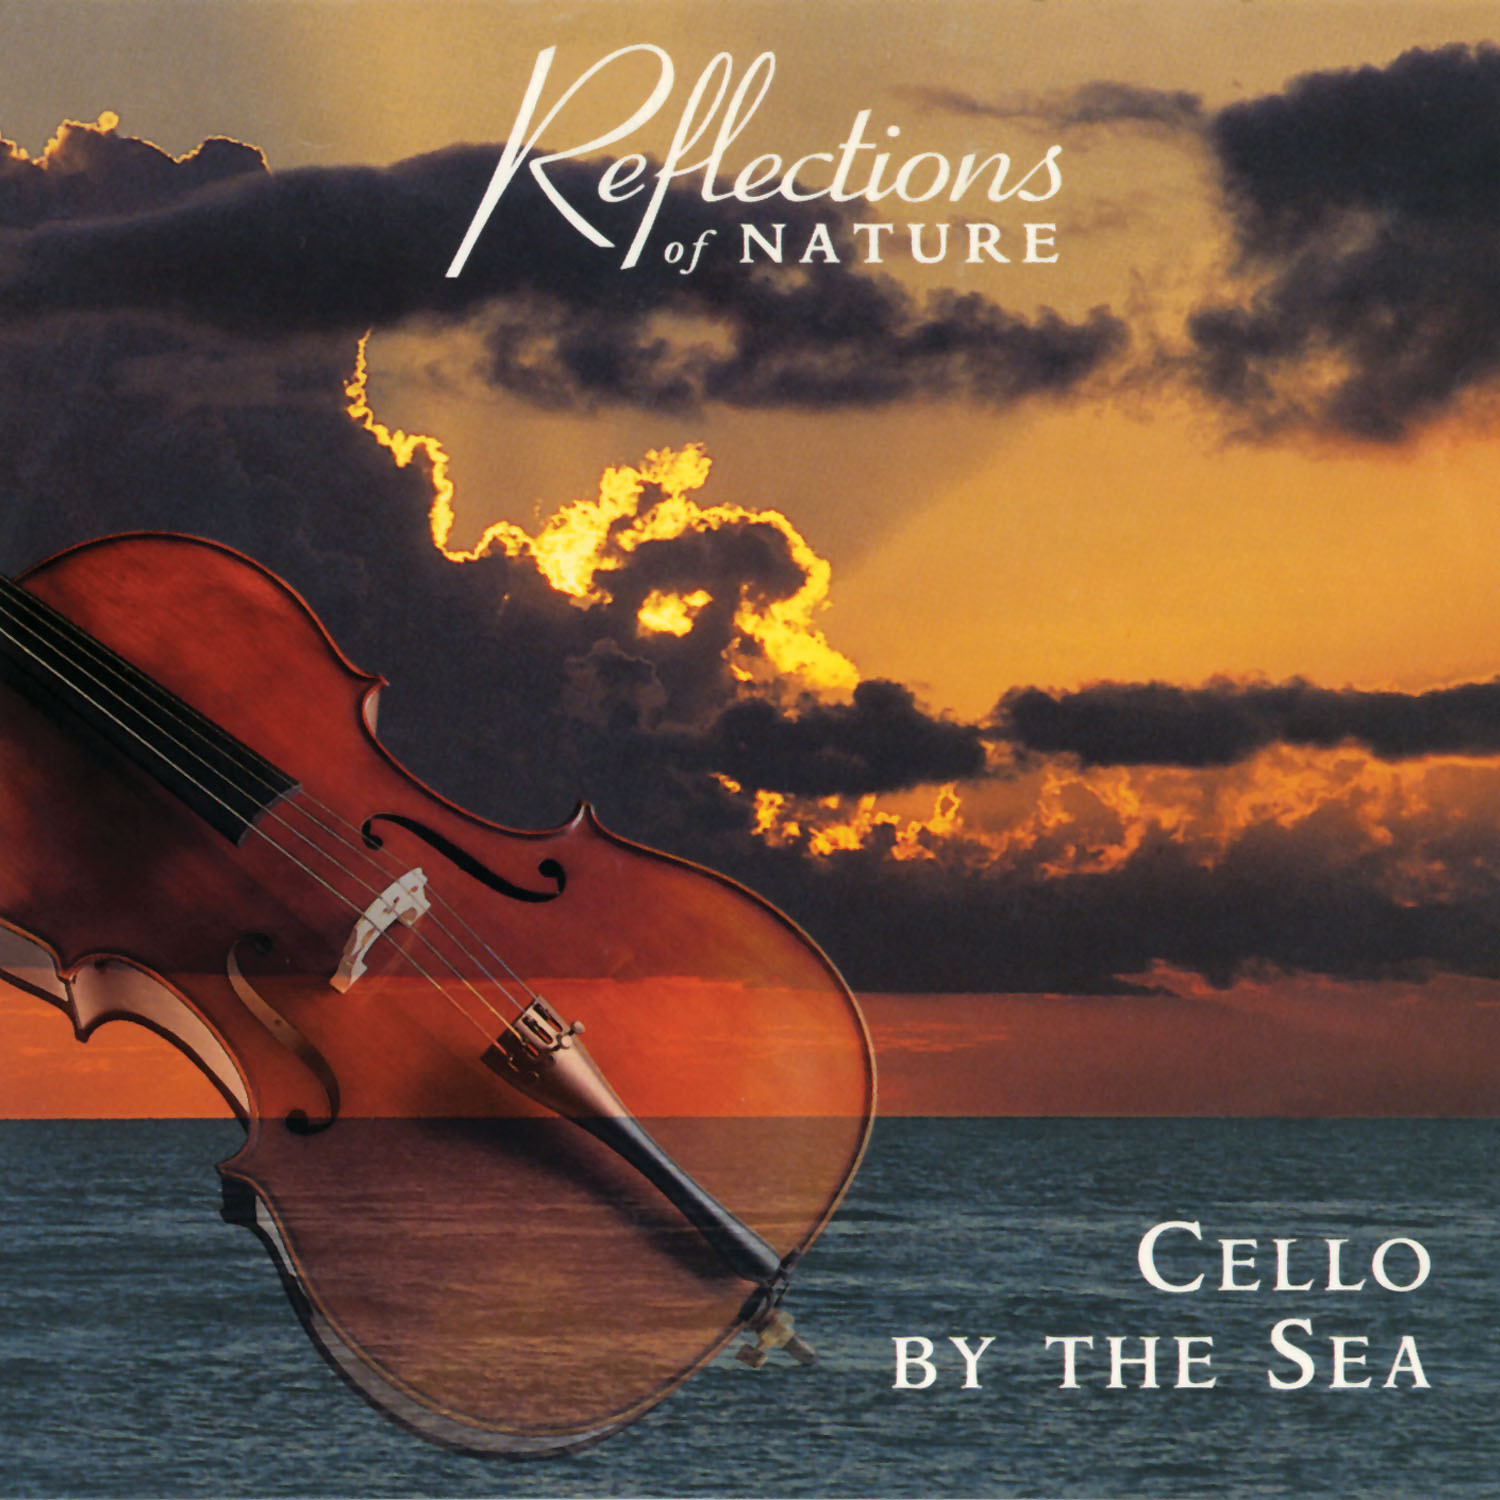 Cello by the Sea